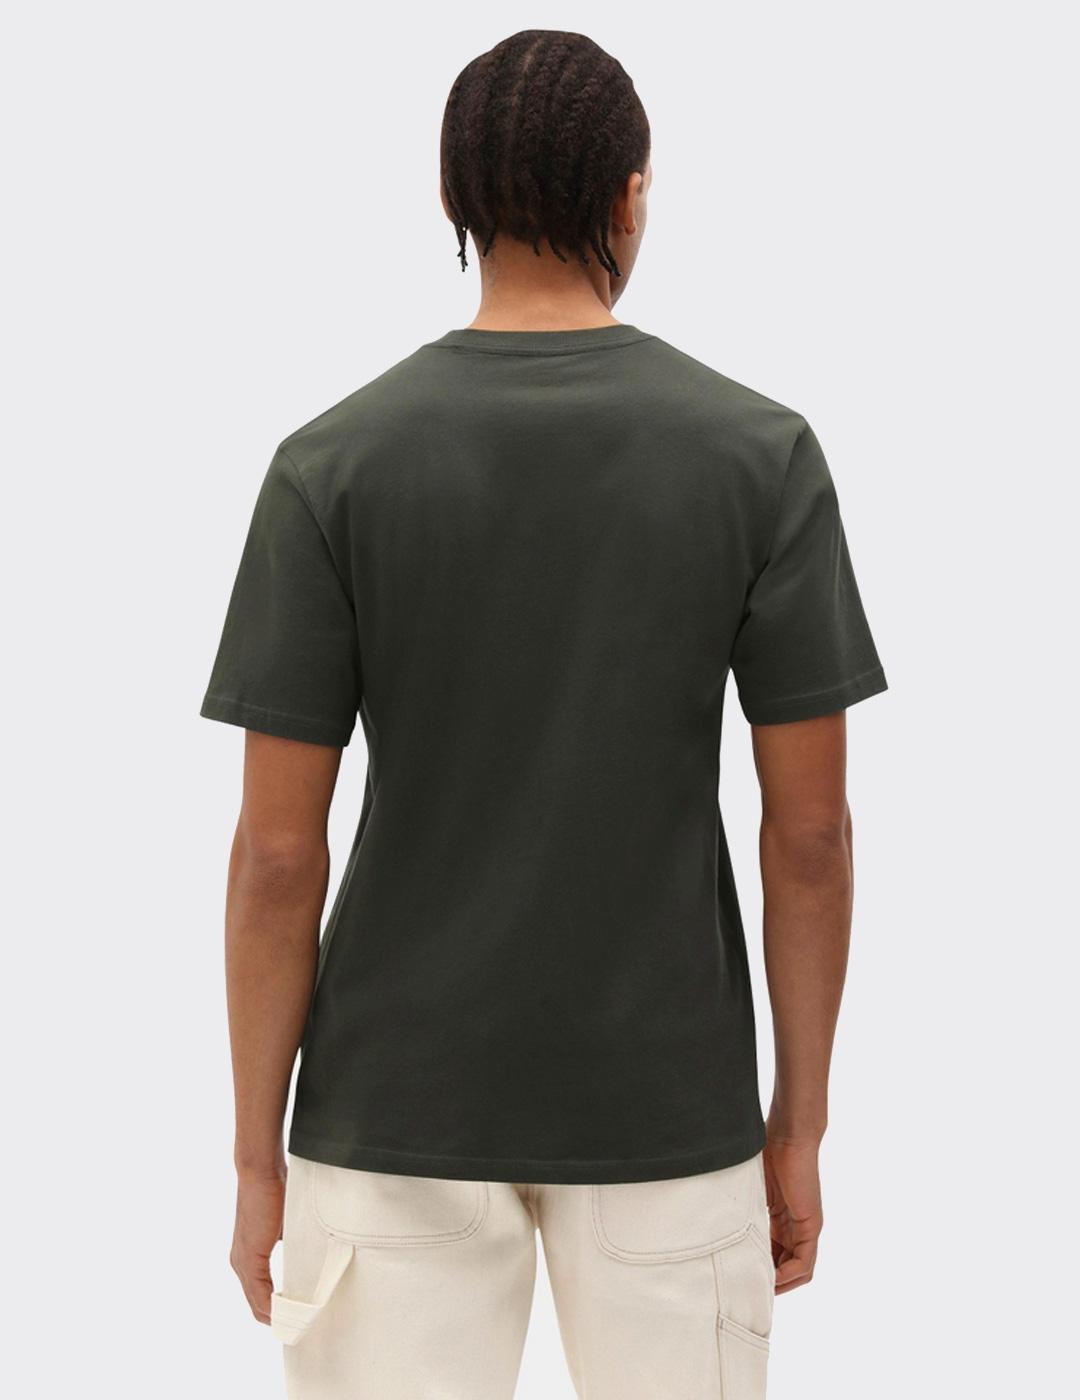 Camiseta DICKIES MAPLETON - Olive Green